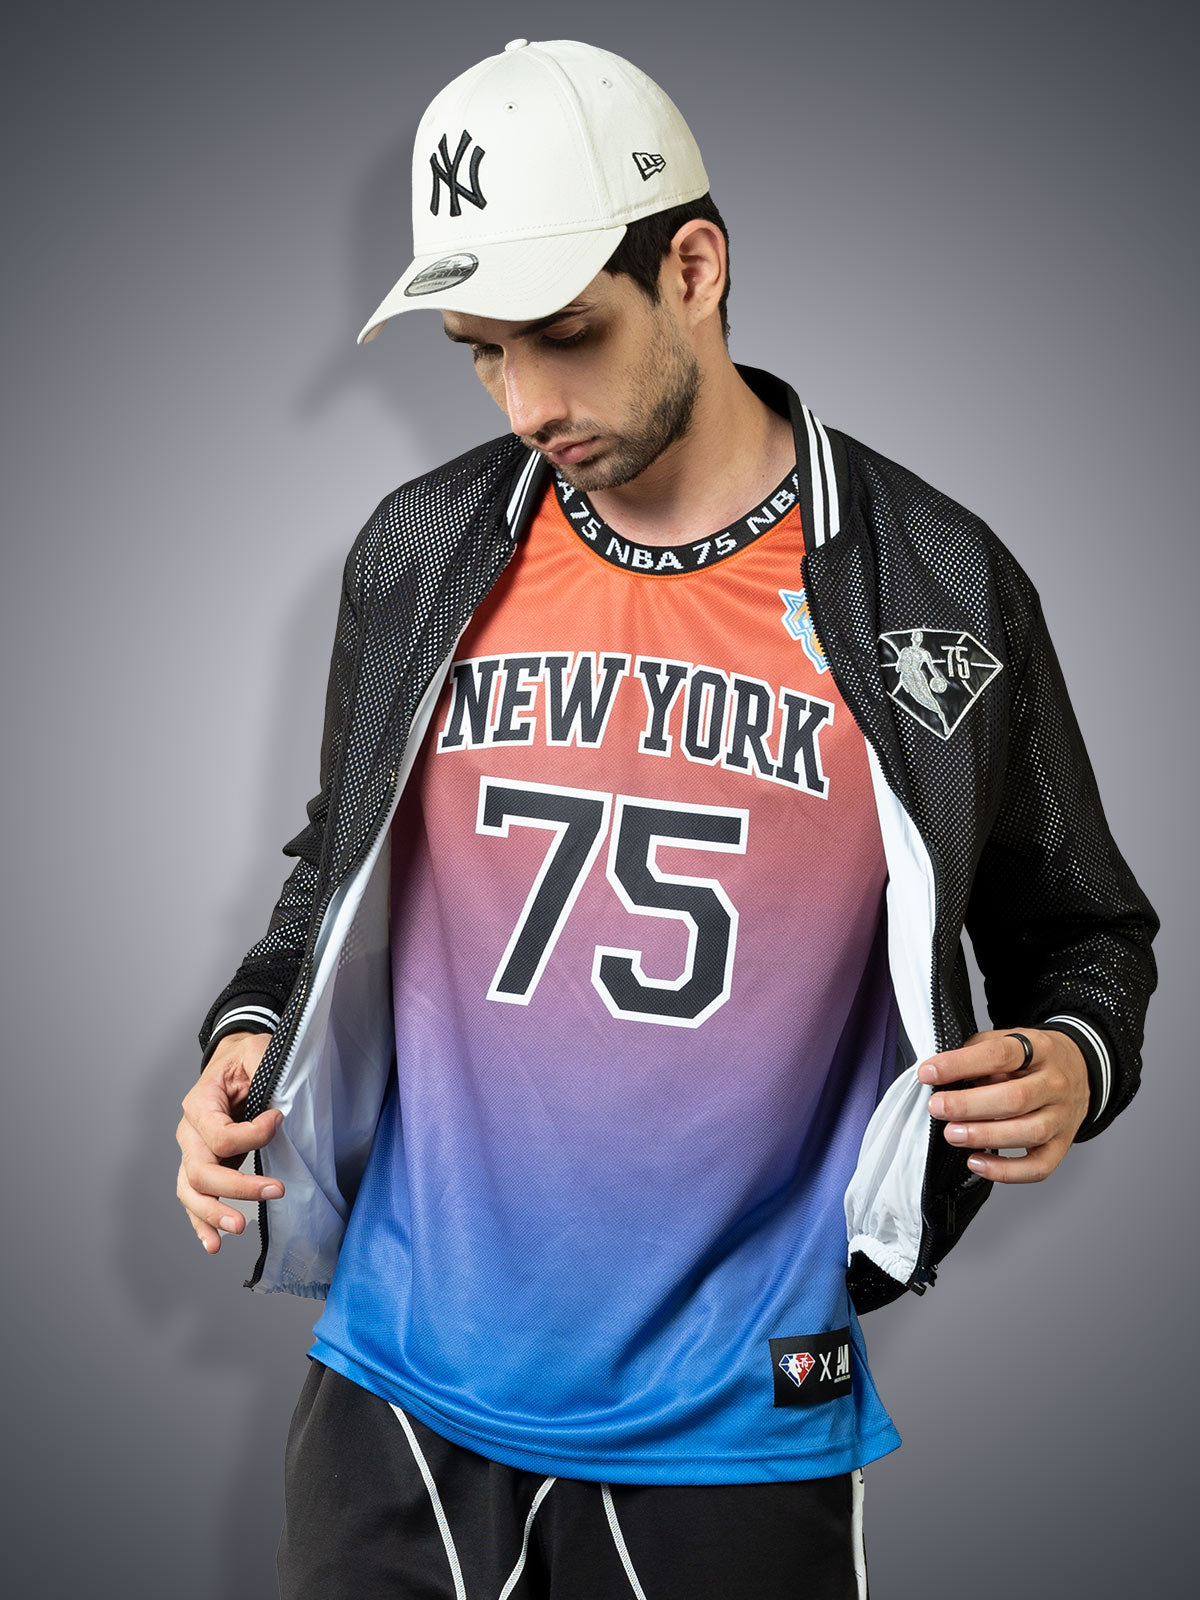 New York Knicks Shirt Adult L Blue 75th Anniversary Stadium NBA Apparel Men